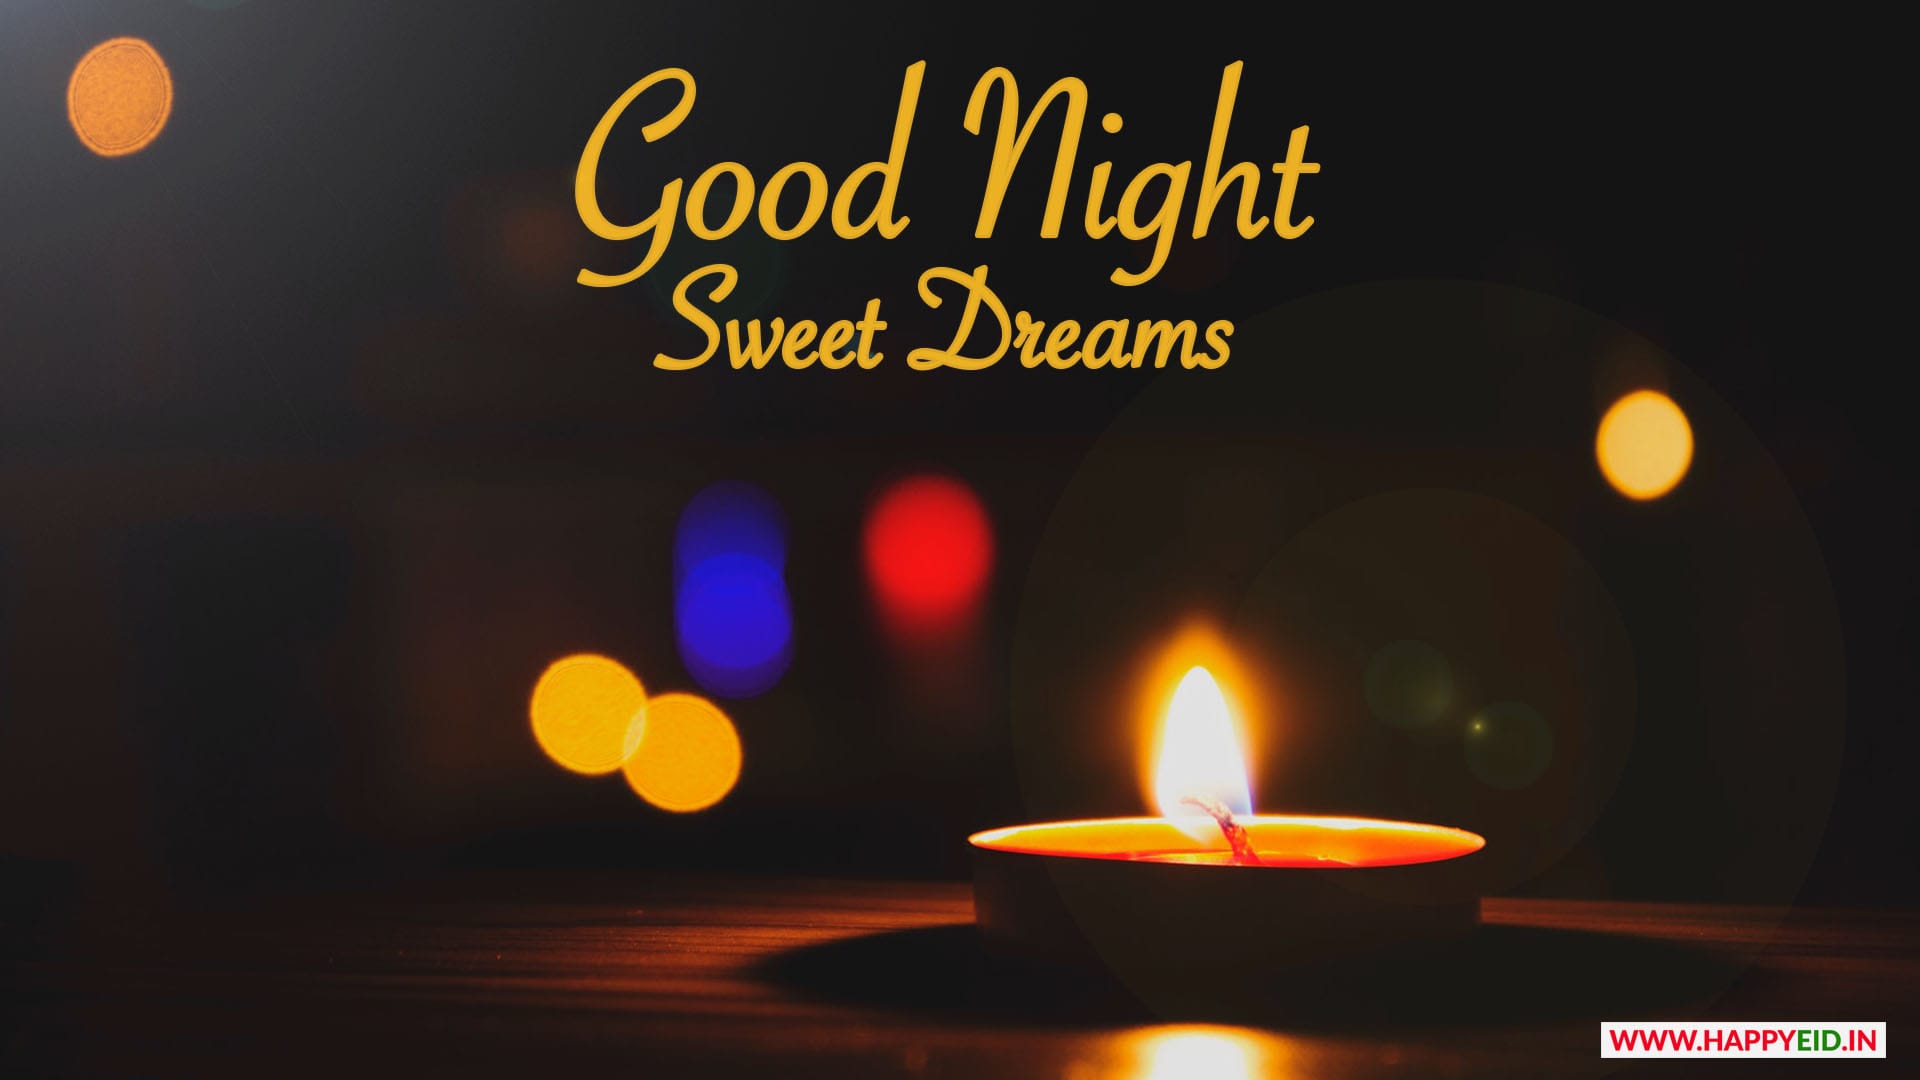 Good Night Sleep Dreams Status Image Night Diwali Messages